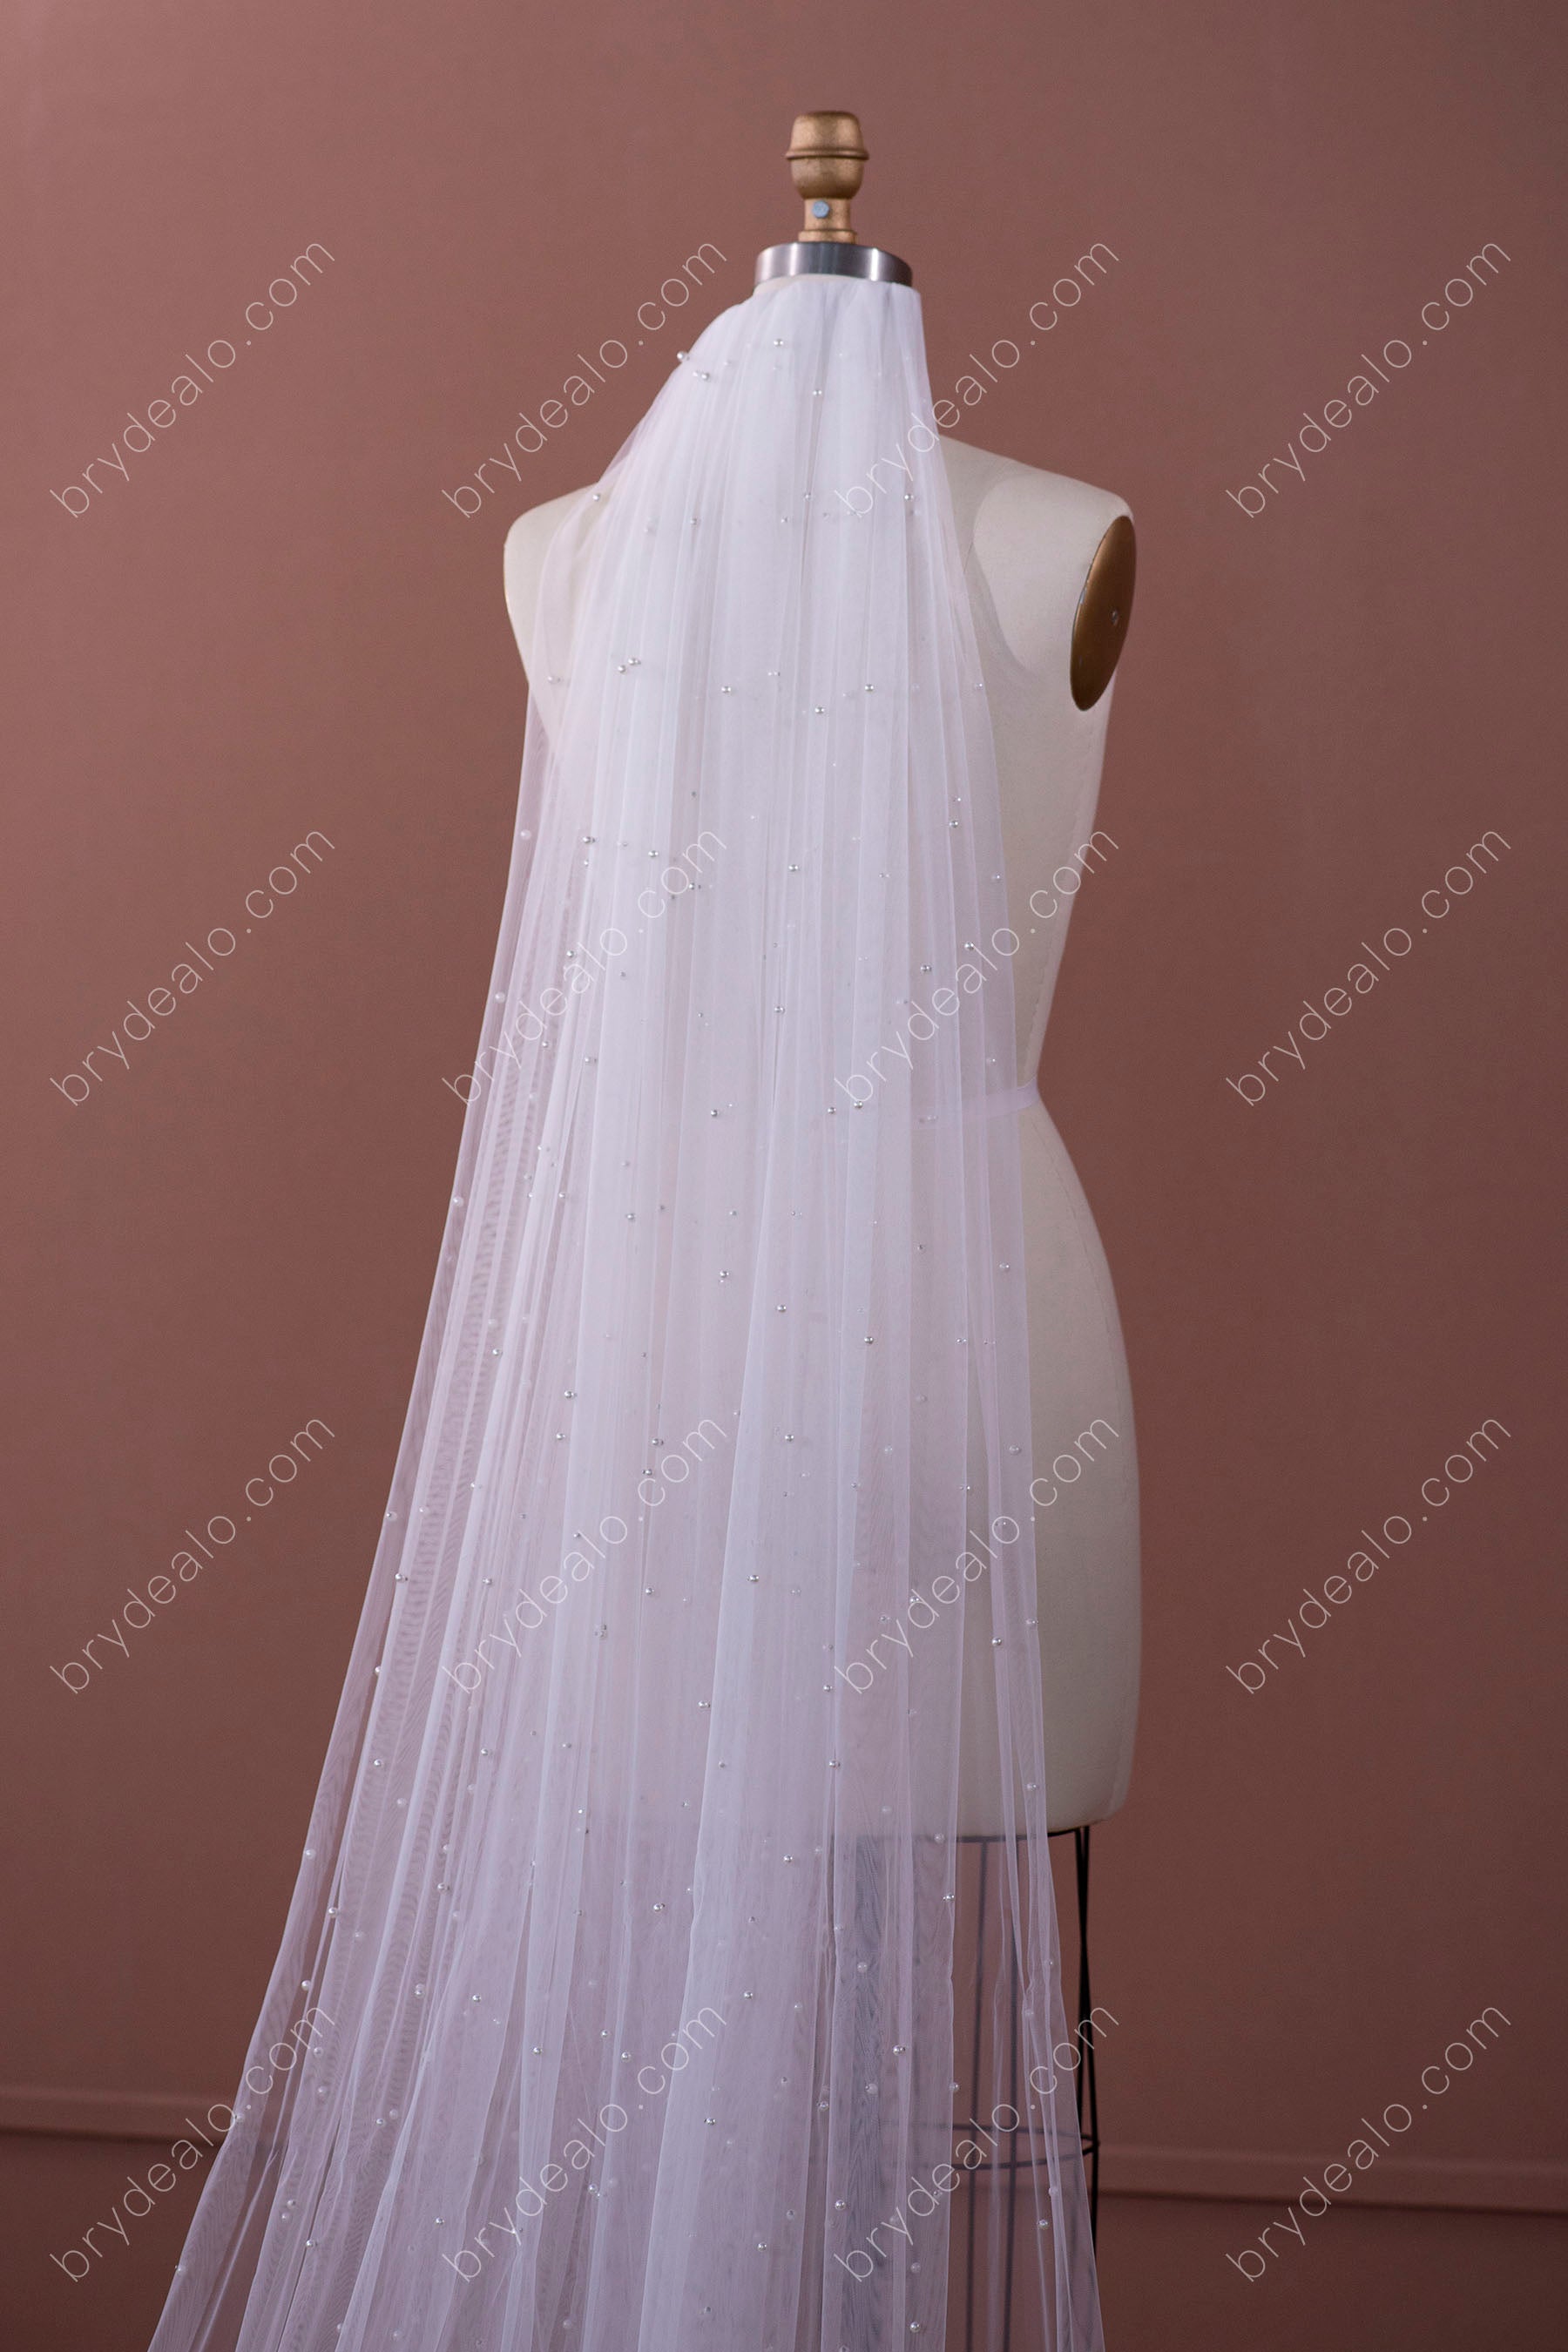 https://cdn.shopify.com/s/files/1/0558/7599/3647/products/eternal-pearls-chapel-length-wedding-veil.jpg?v=1644140132&width=1800